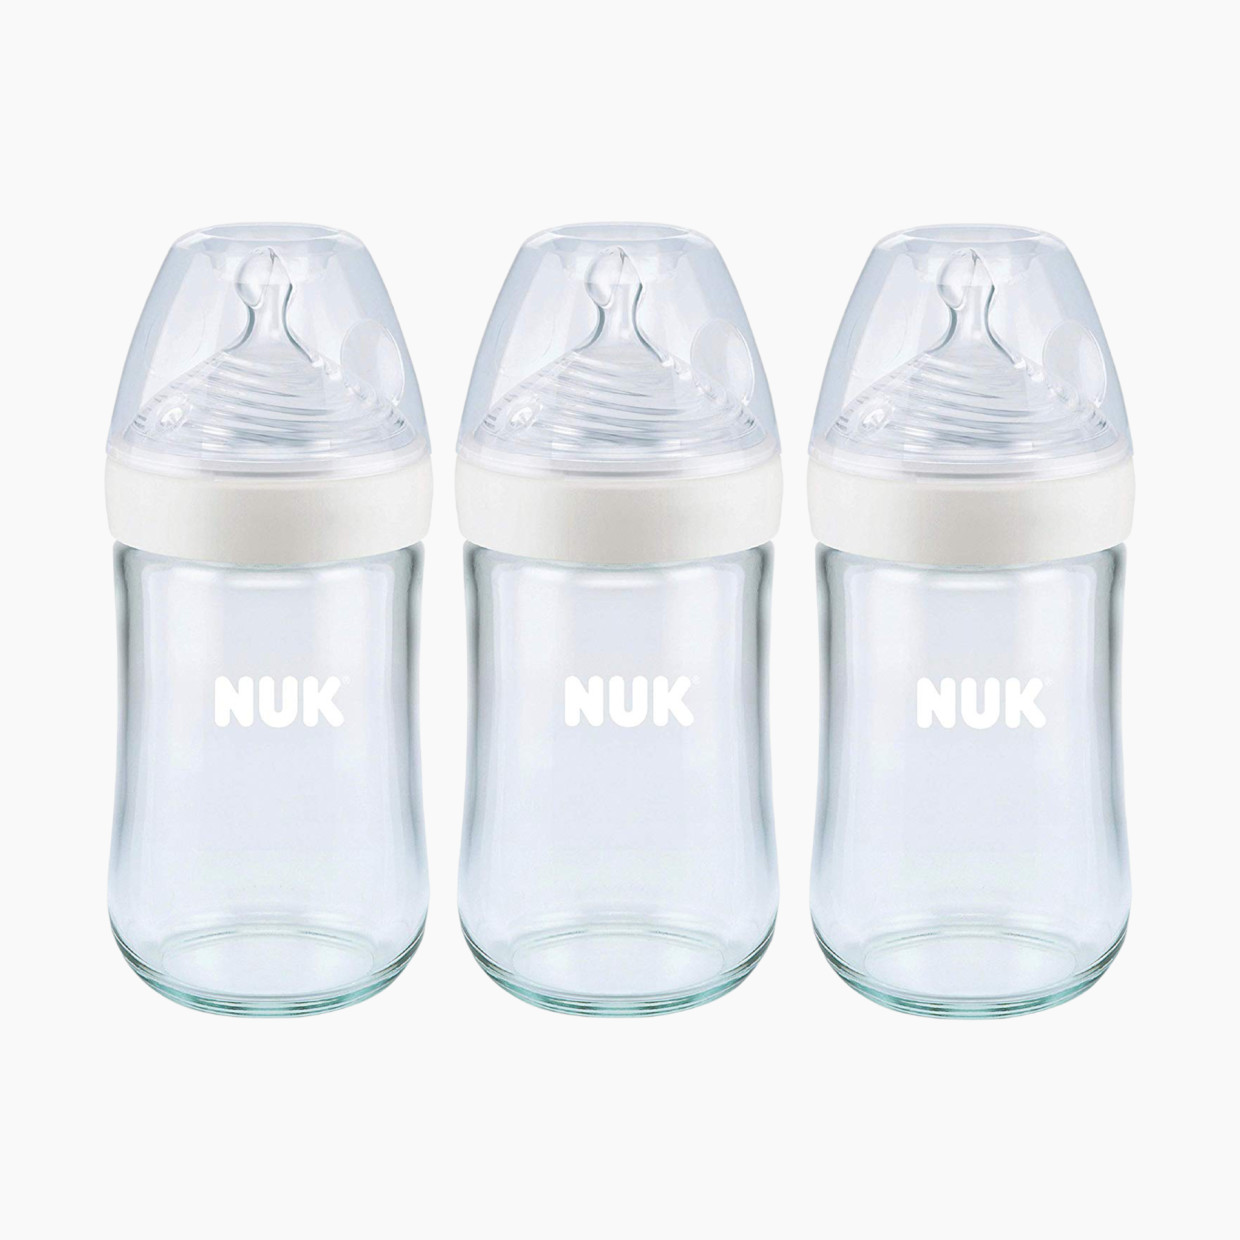 NUK Simply Natural Glass (3 Pack) - 8oz.